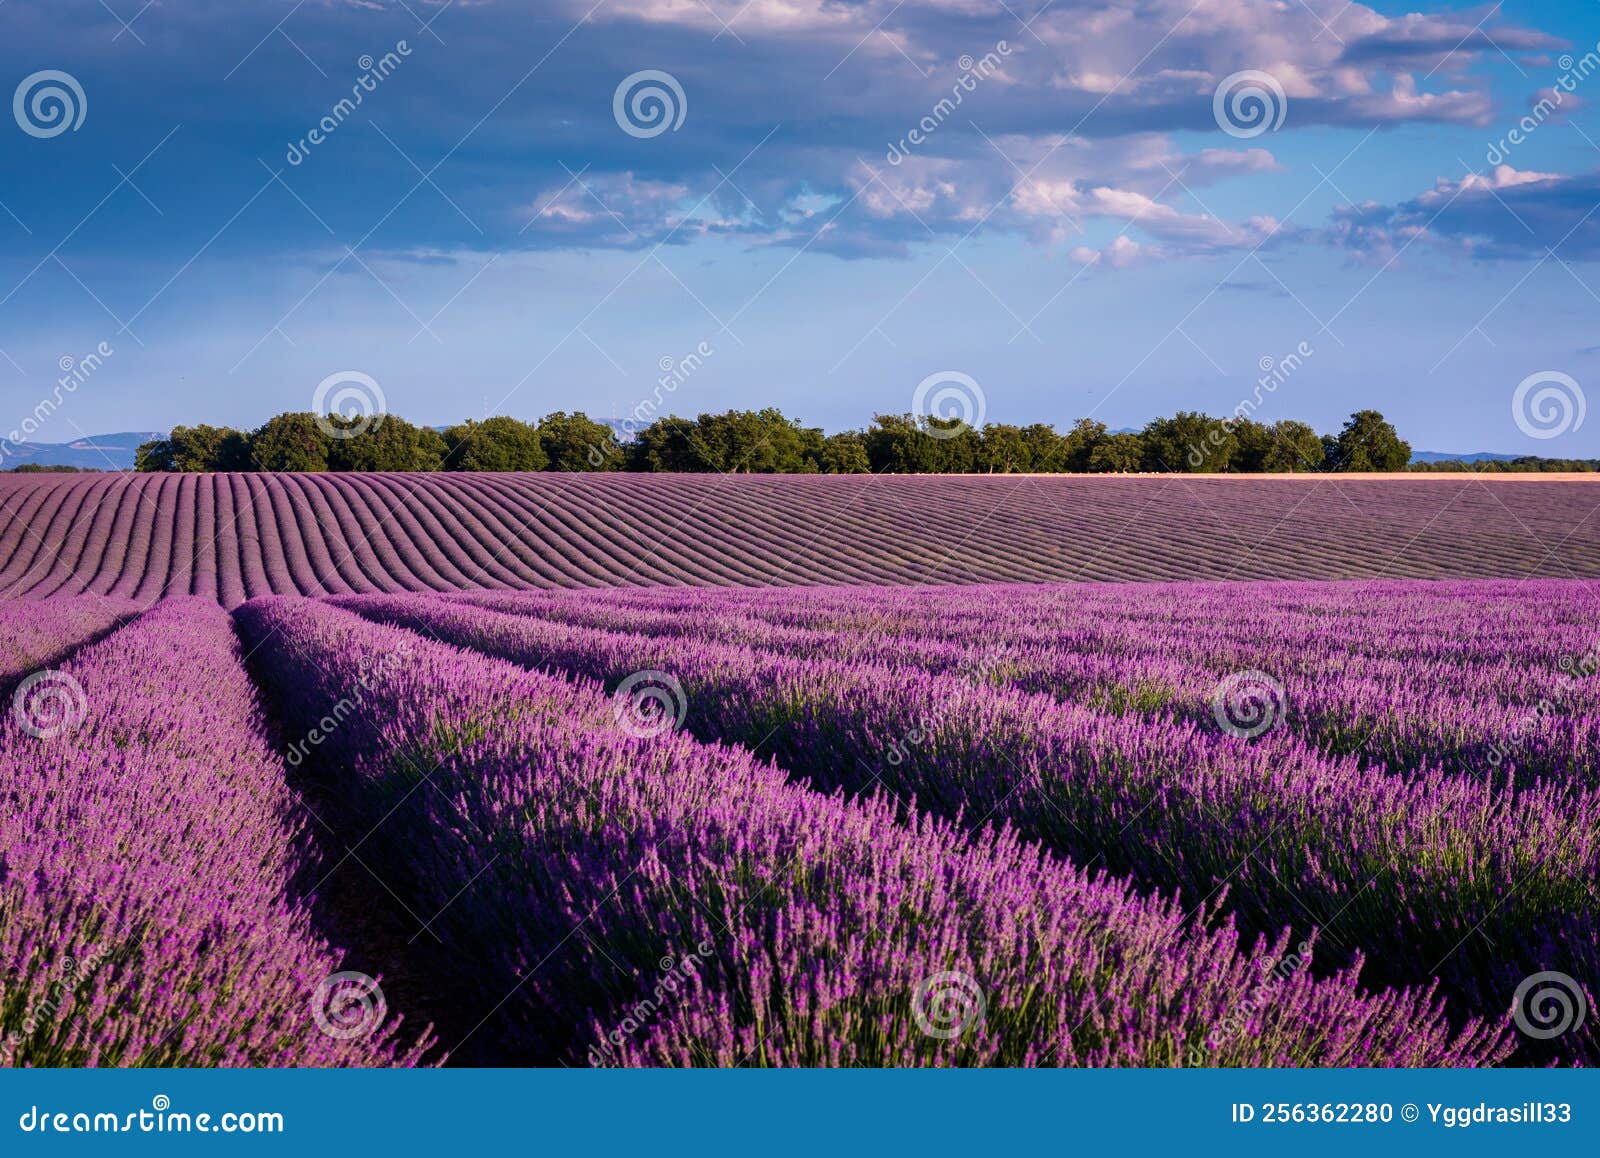 Typical Landscape of Lavender Fields on Valensole Plateau Stock Photo ...